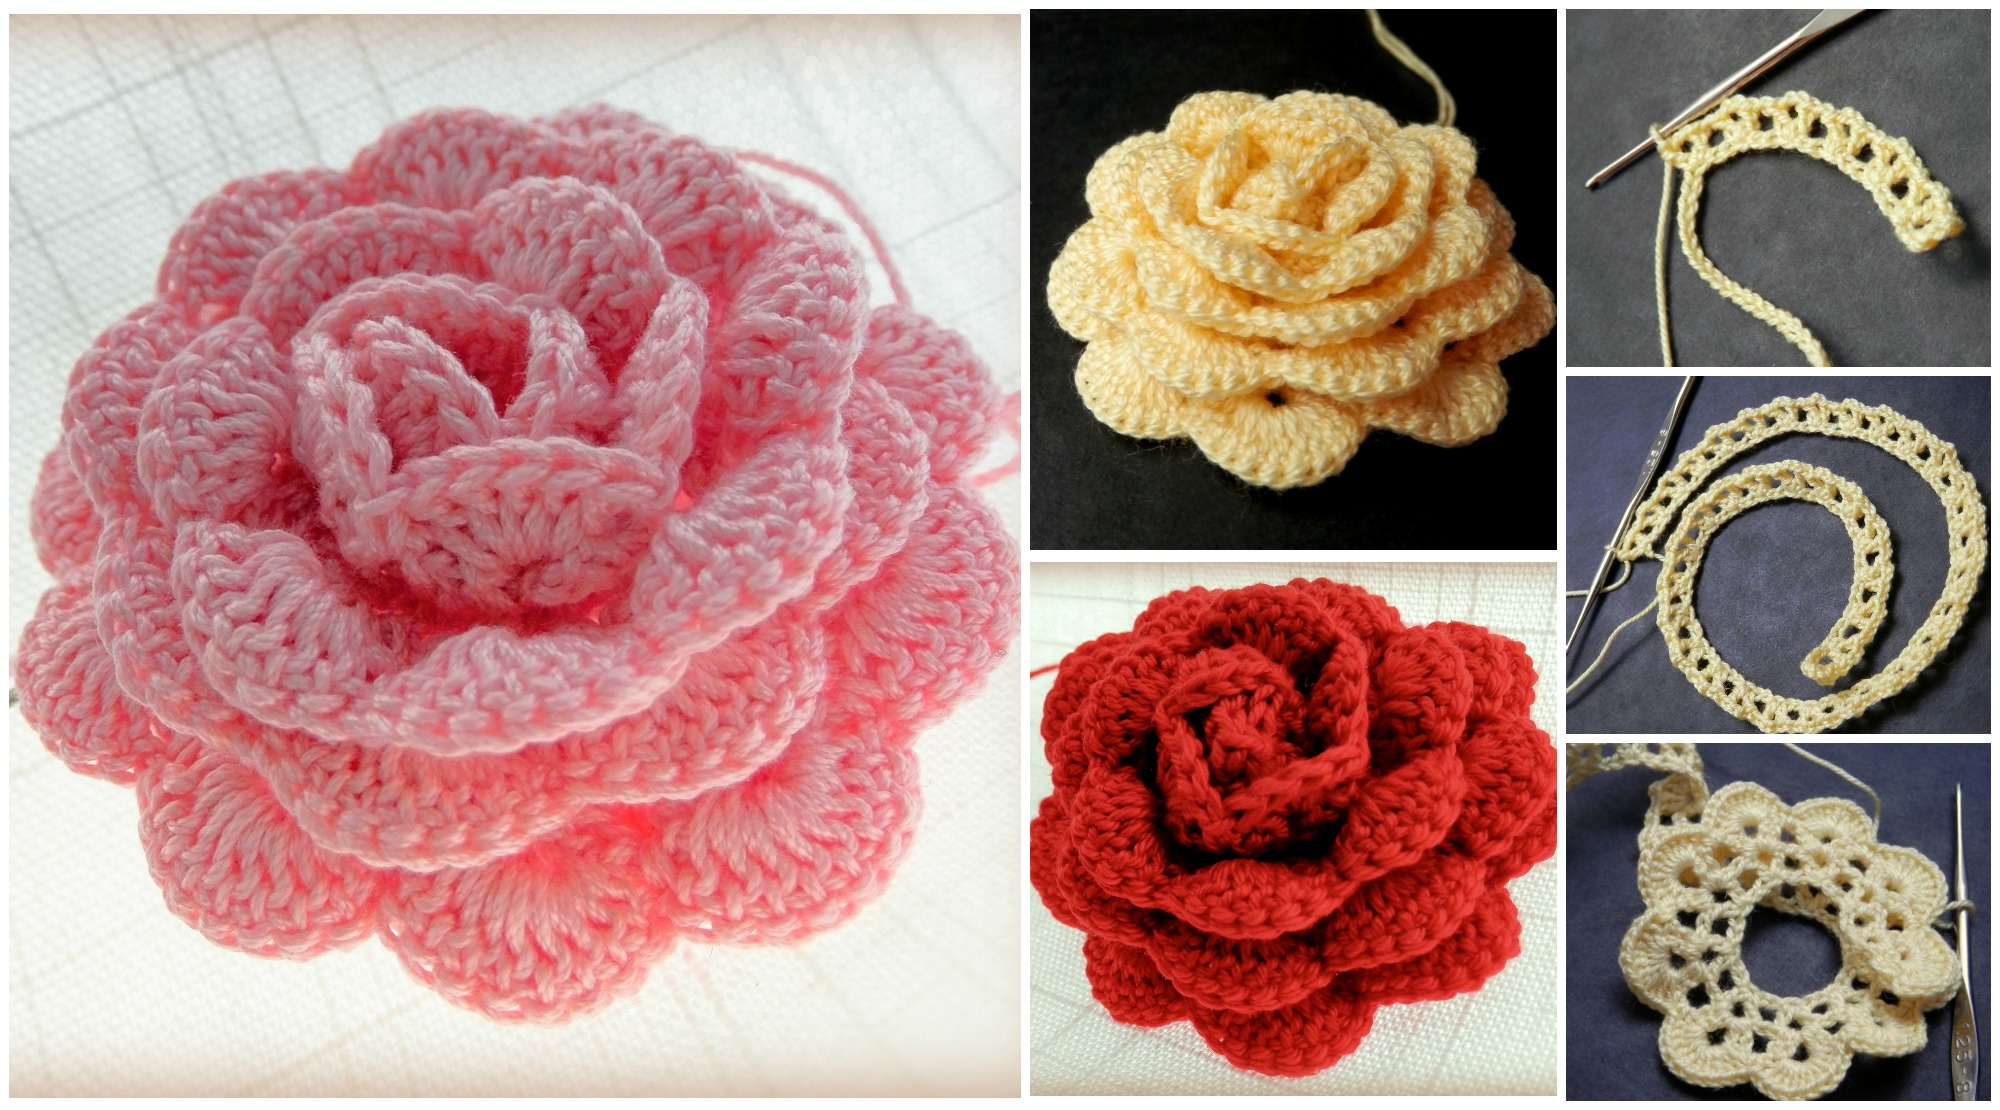 Crochet Rose With 1.25mm Hook - Pretty Ideas